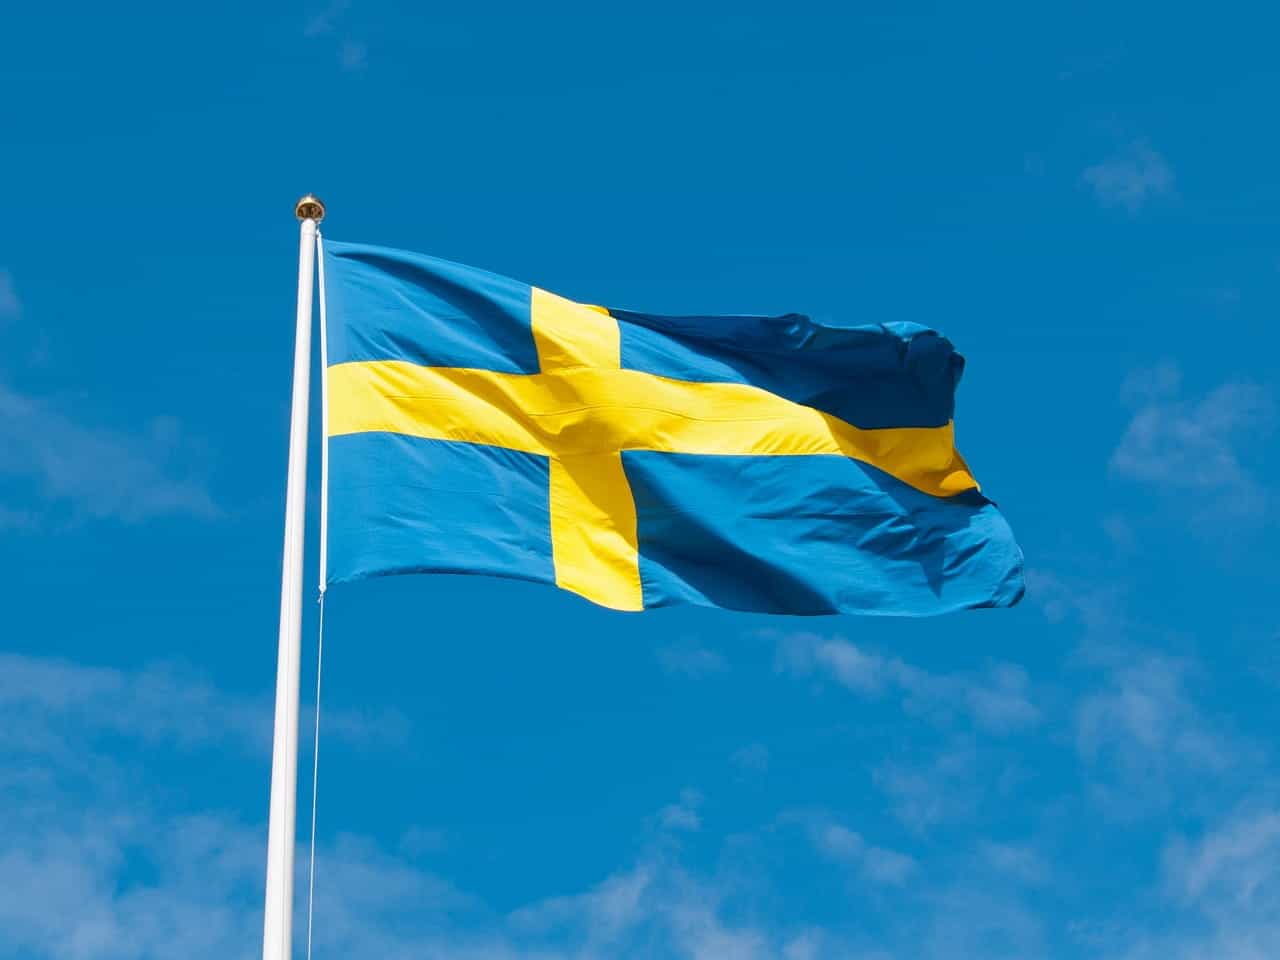 Bendera Swedia berkibar tertiup angin di hari yang cerah.